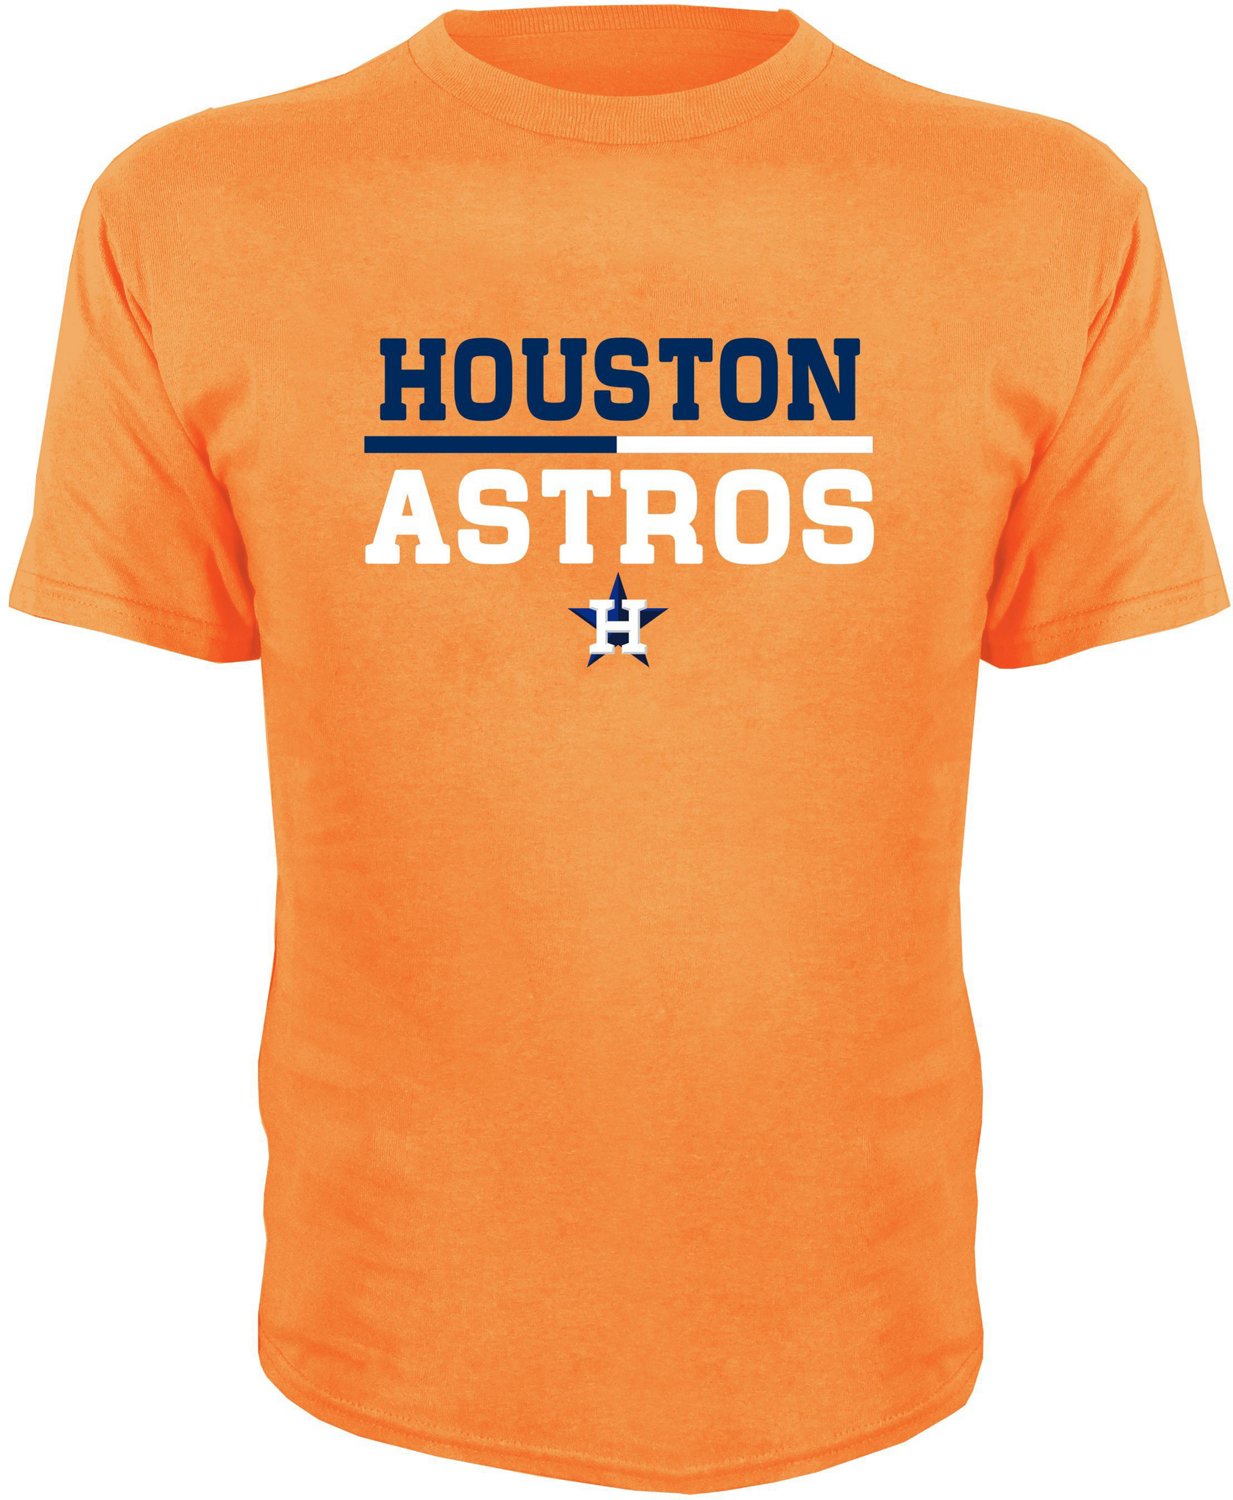 Stitches Boys' Houston Astros Team Graphic T-shirt